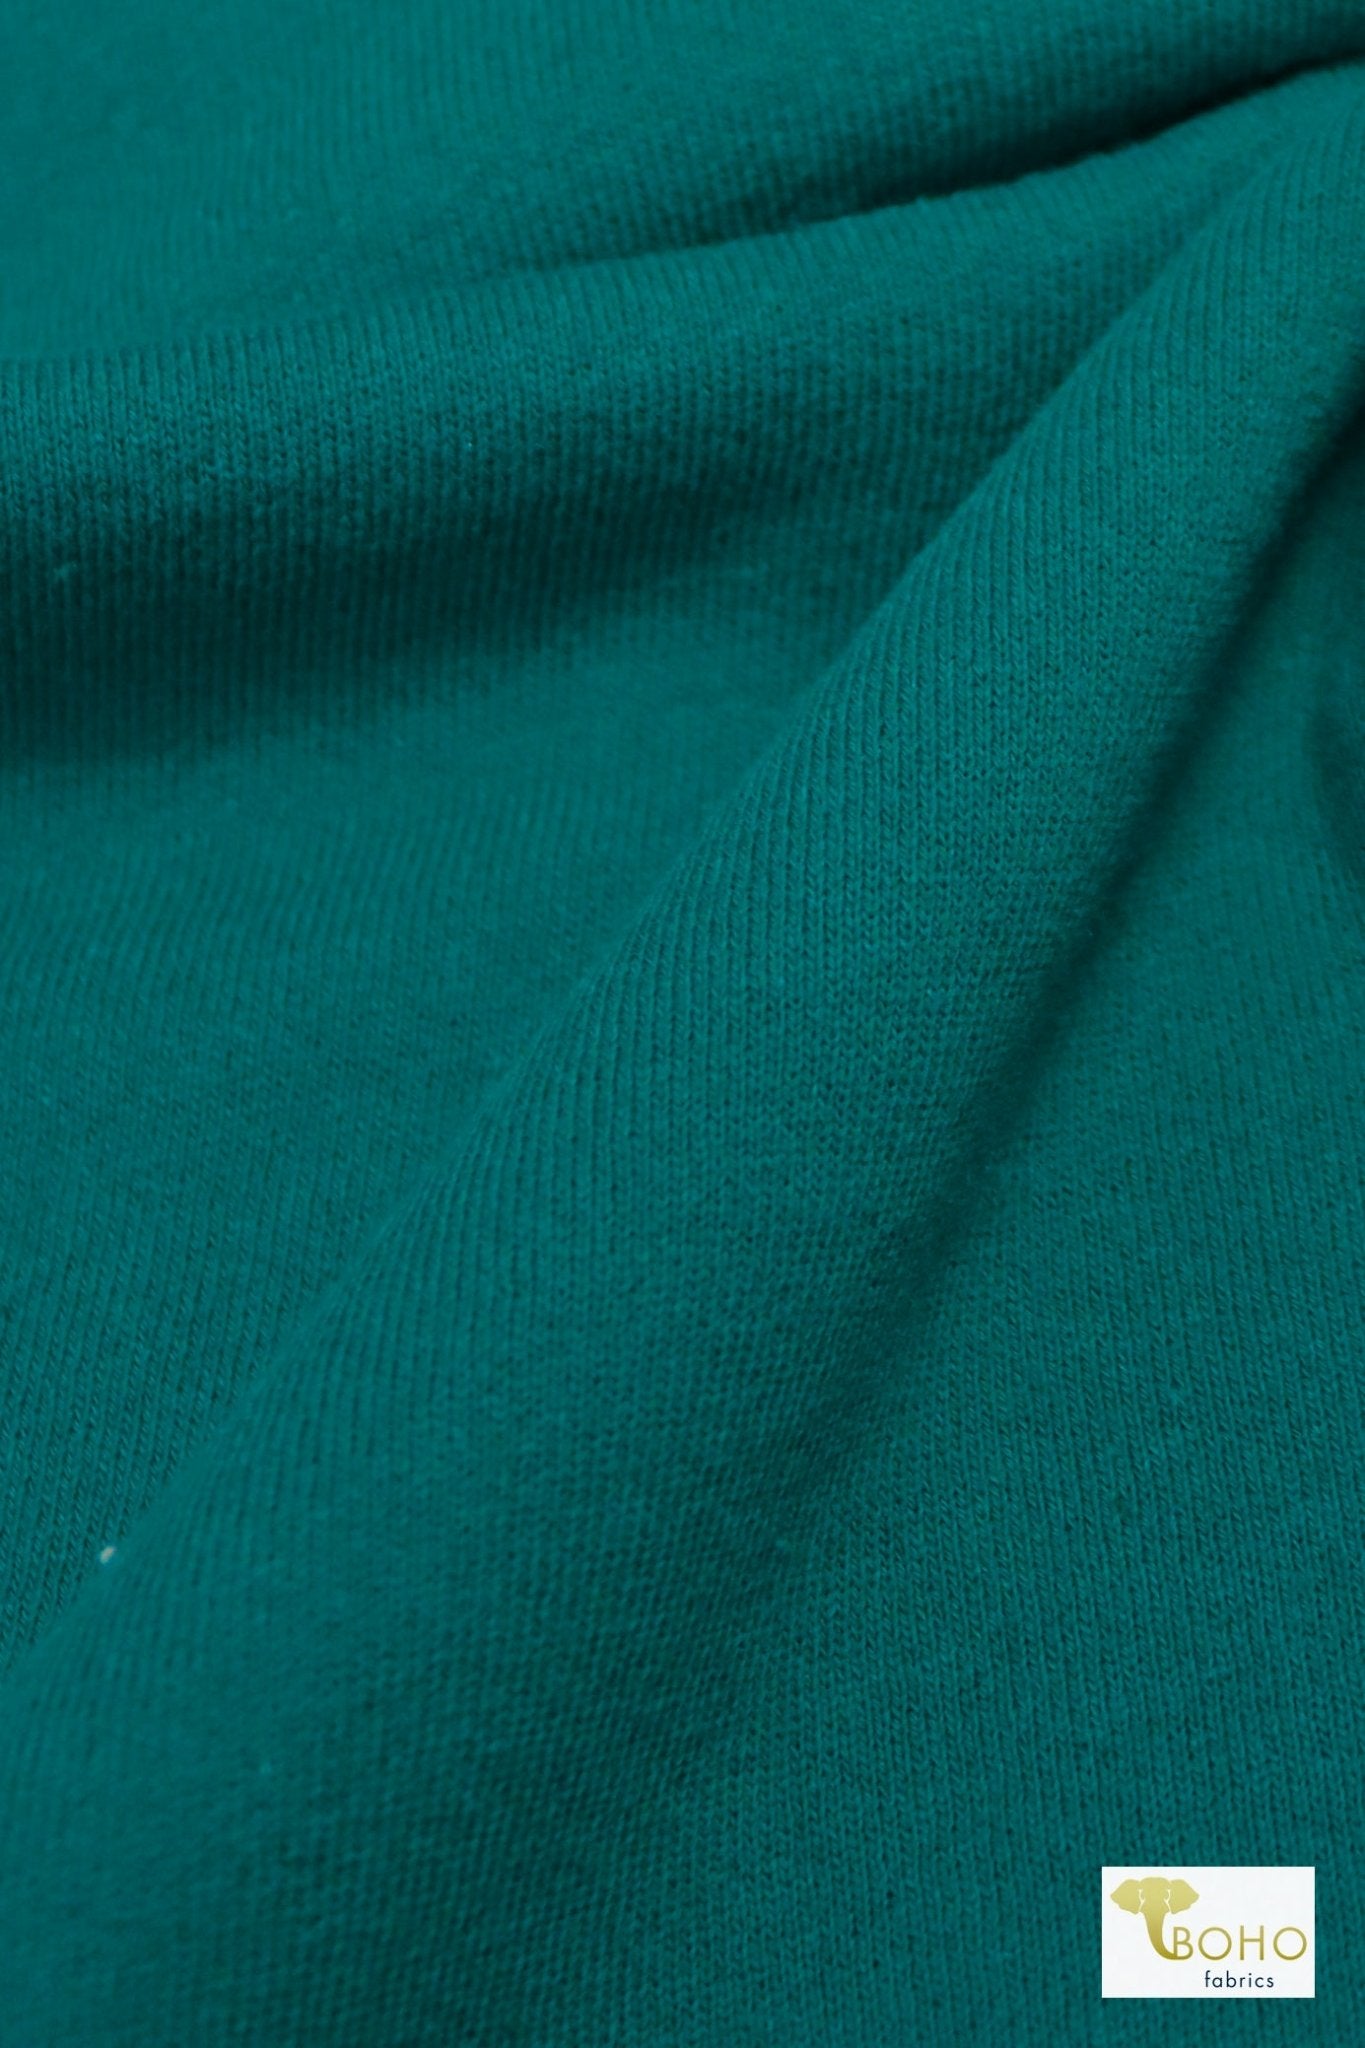 1x1 Rib Knit, Teal Cotton Rib. SOLD BY THE HALF YARD! - Boho Fabrics